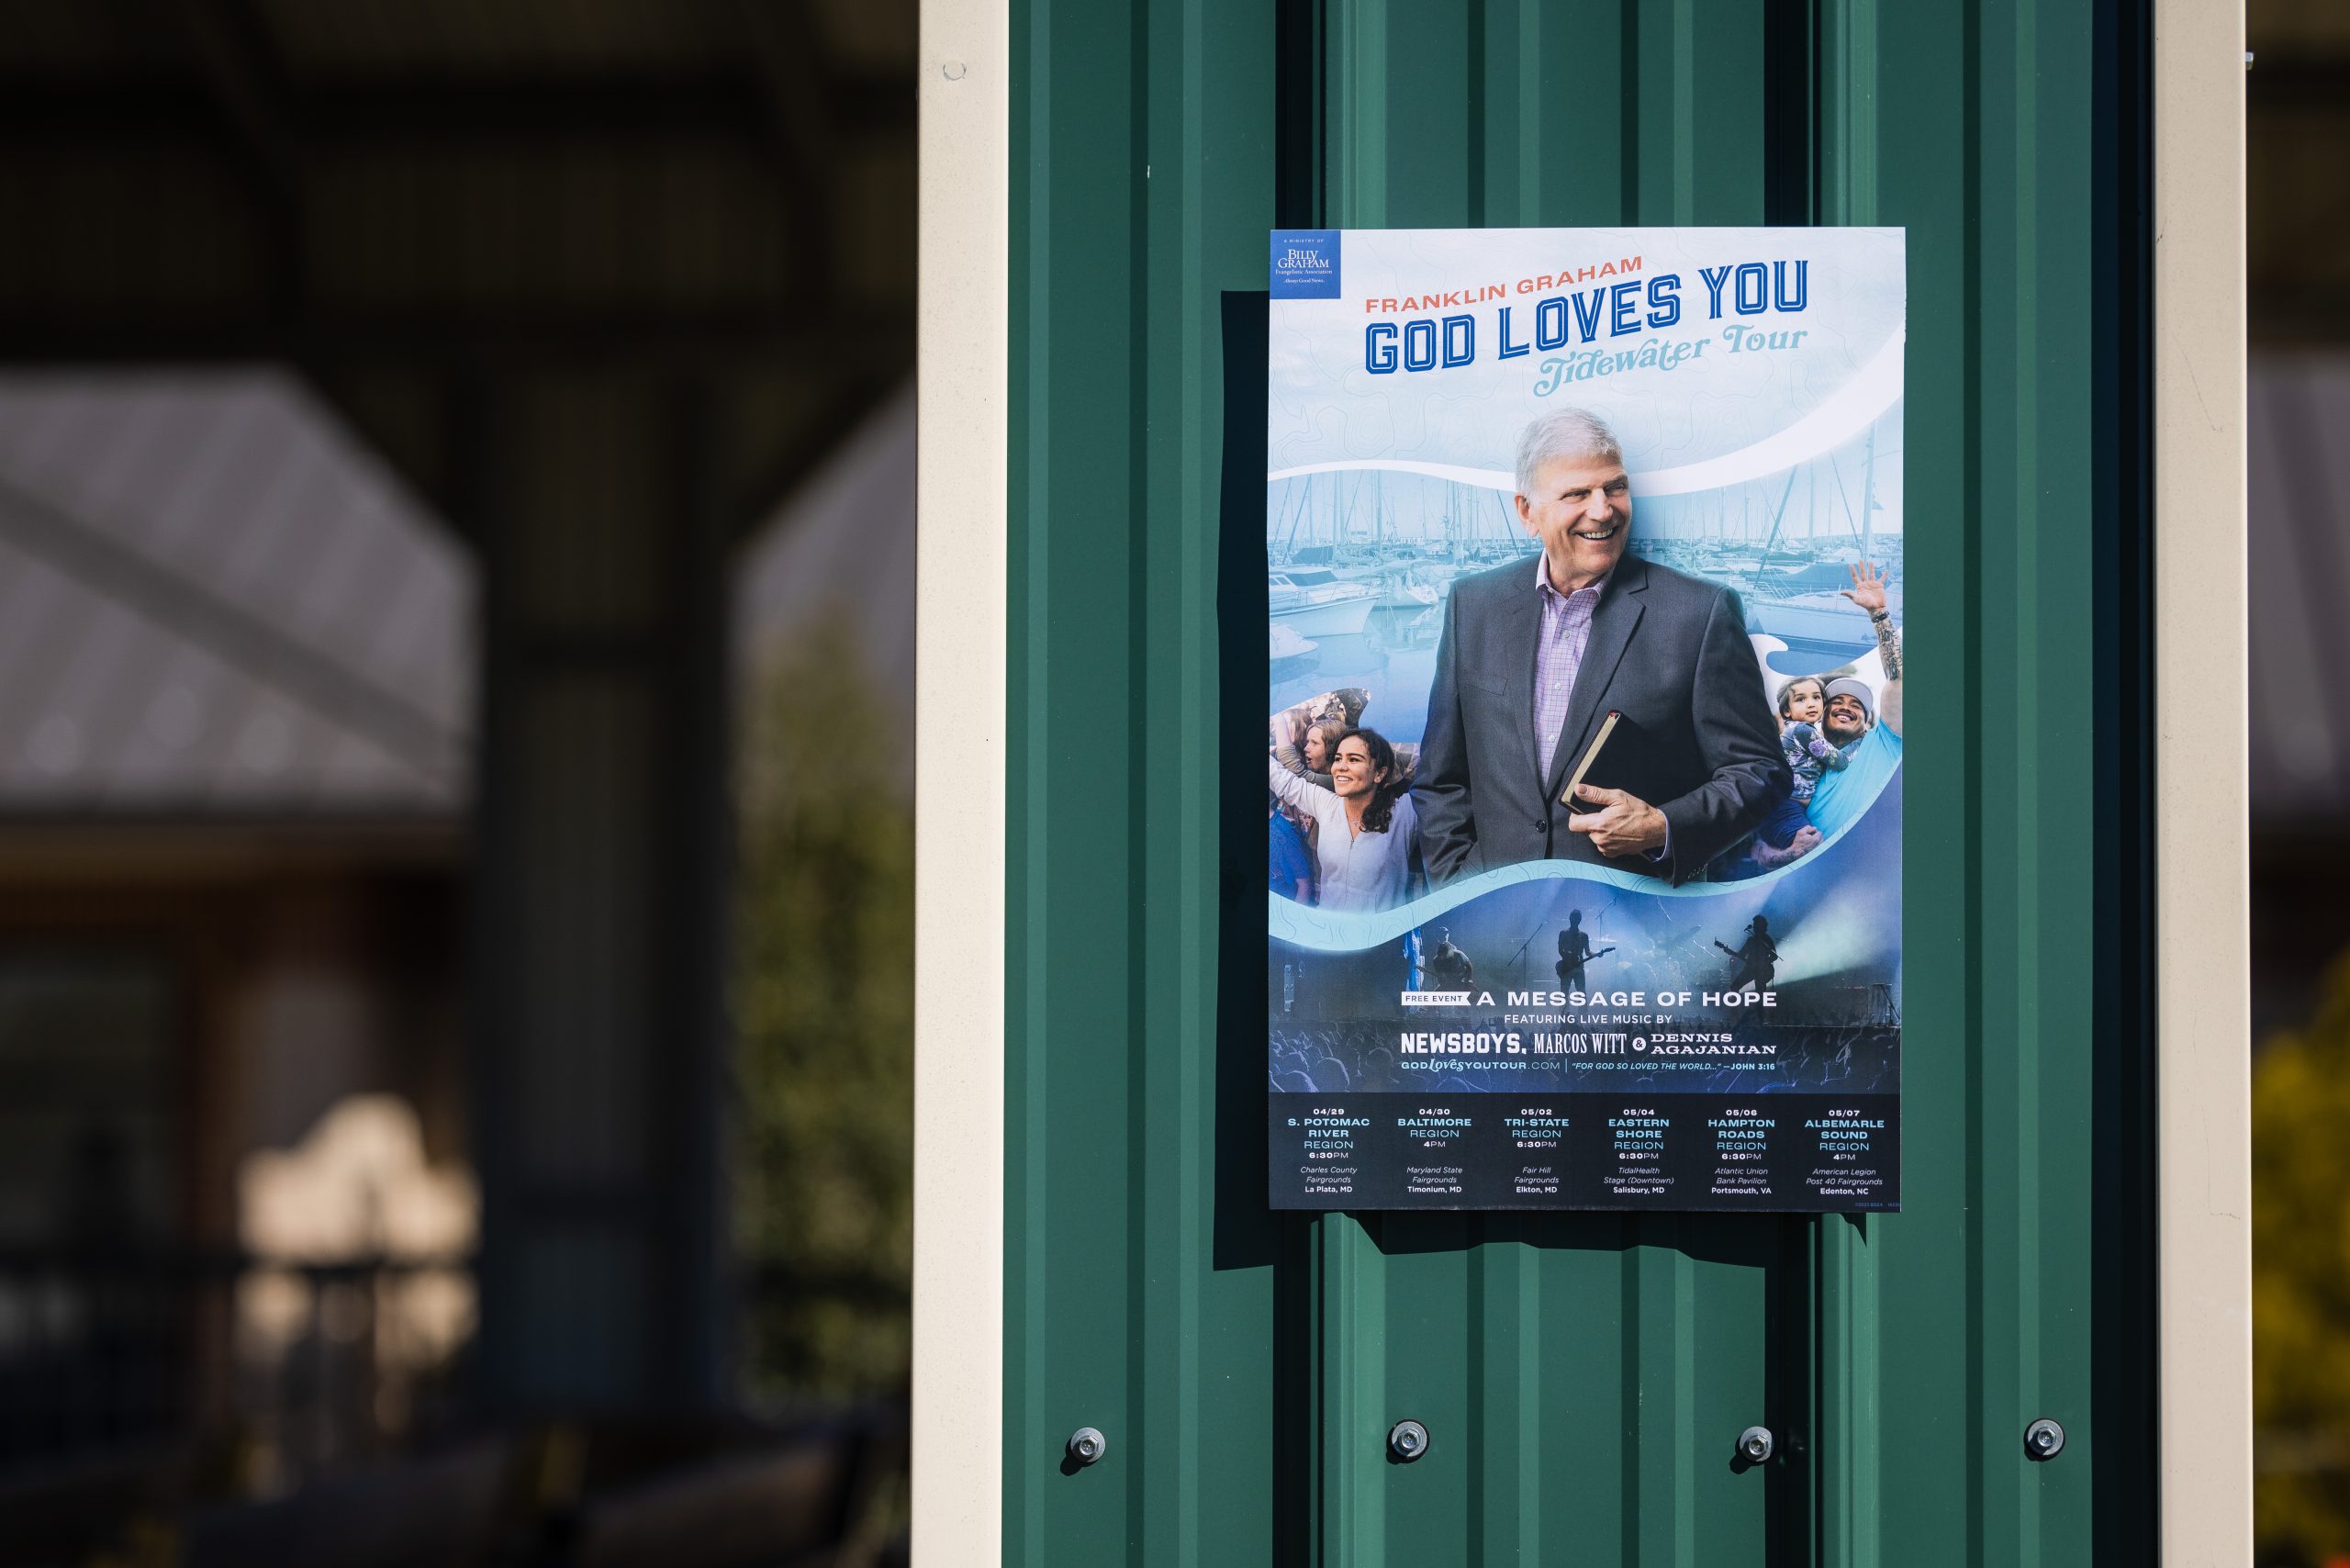 Franklin Graham bringing God Loves You Tidewater Tour to Baltimore region